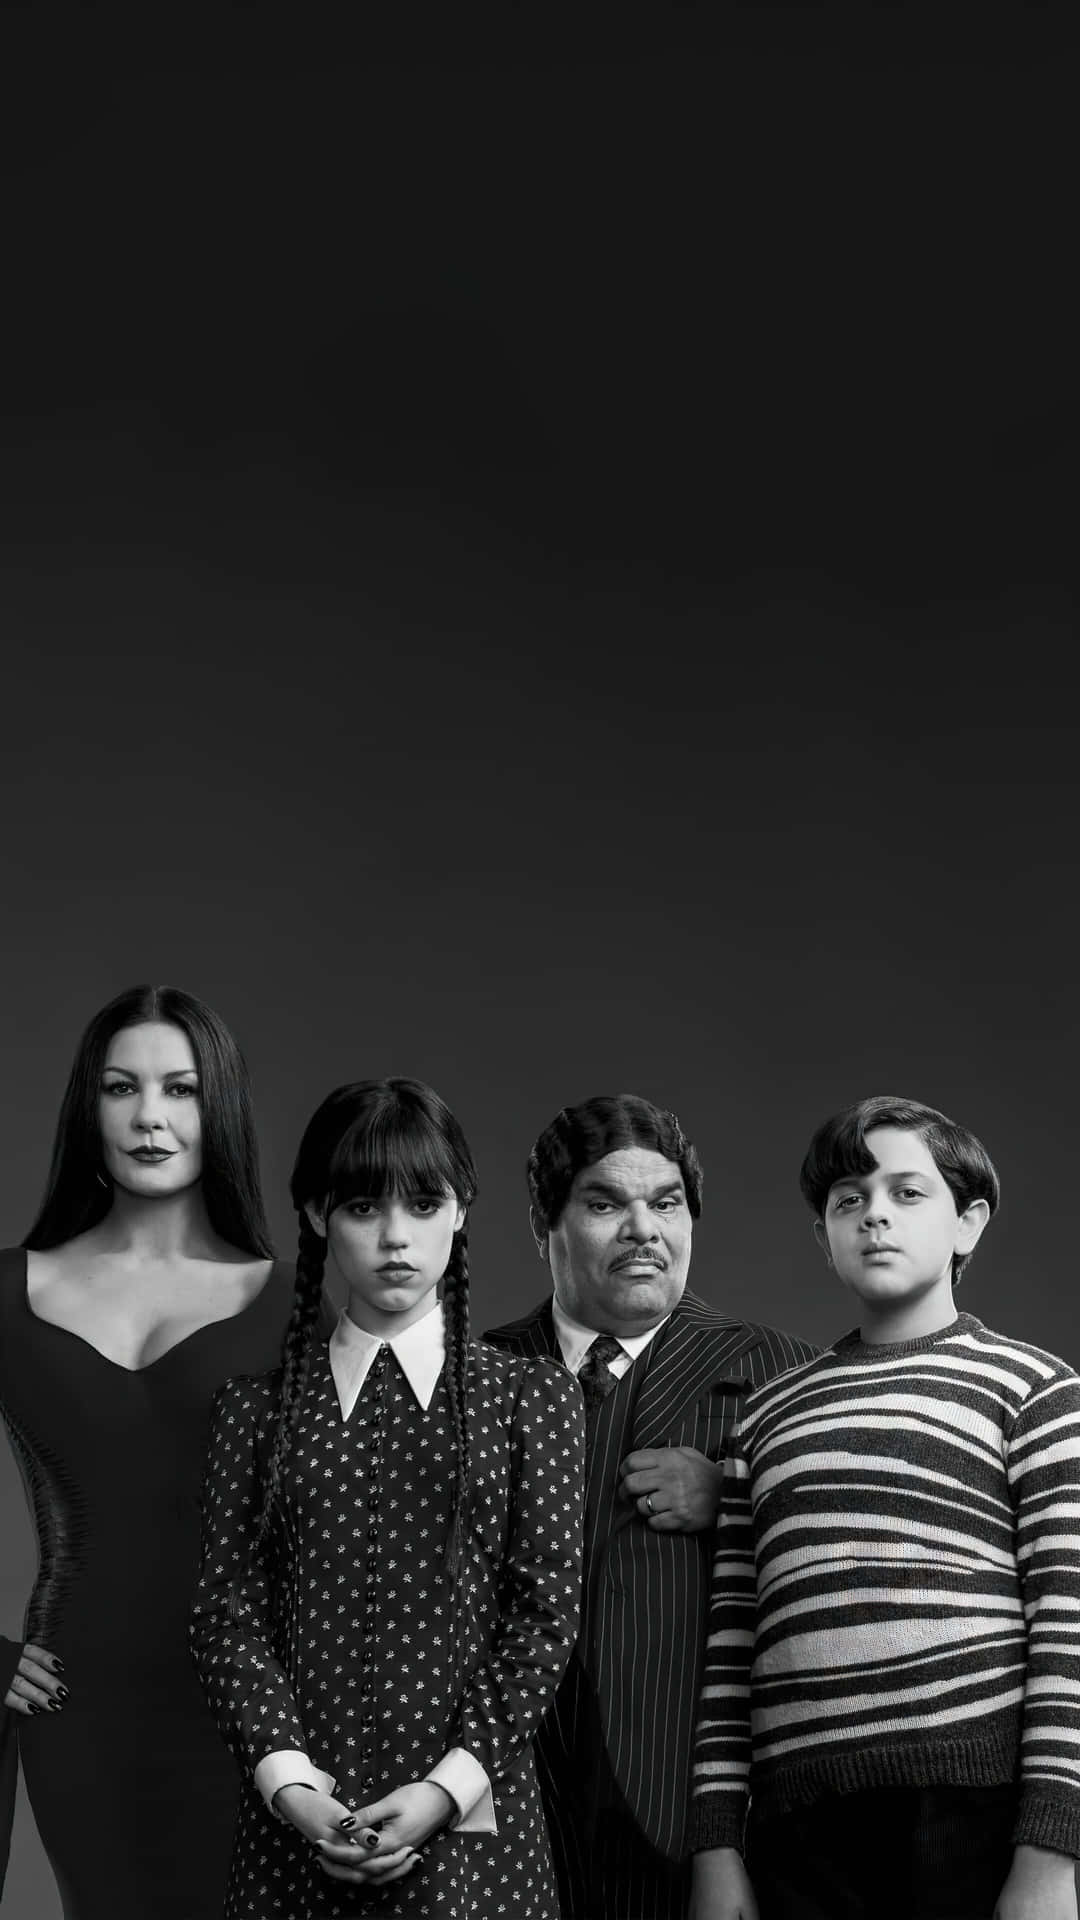 Addams Family Portrait Monochrome Wallpaper